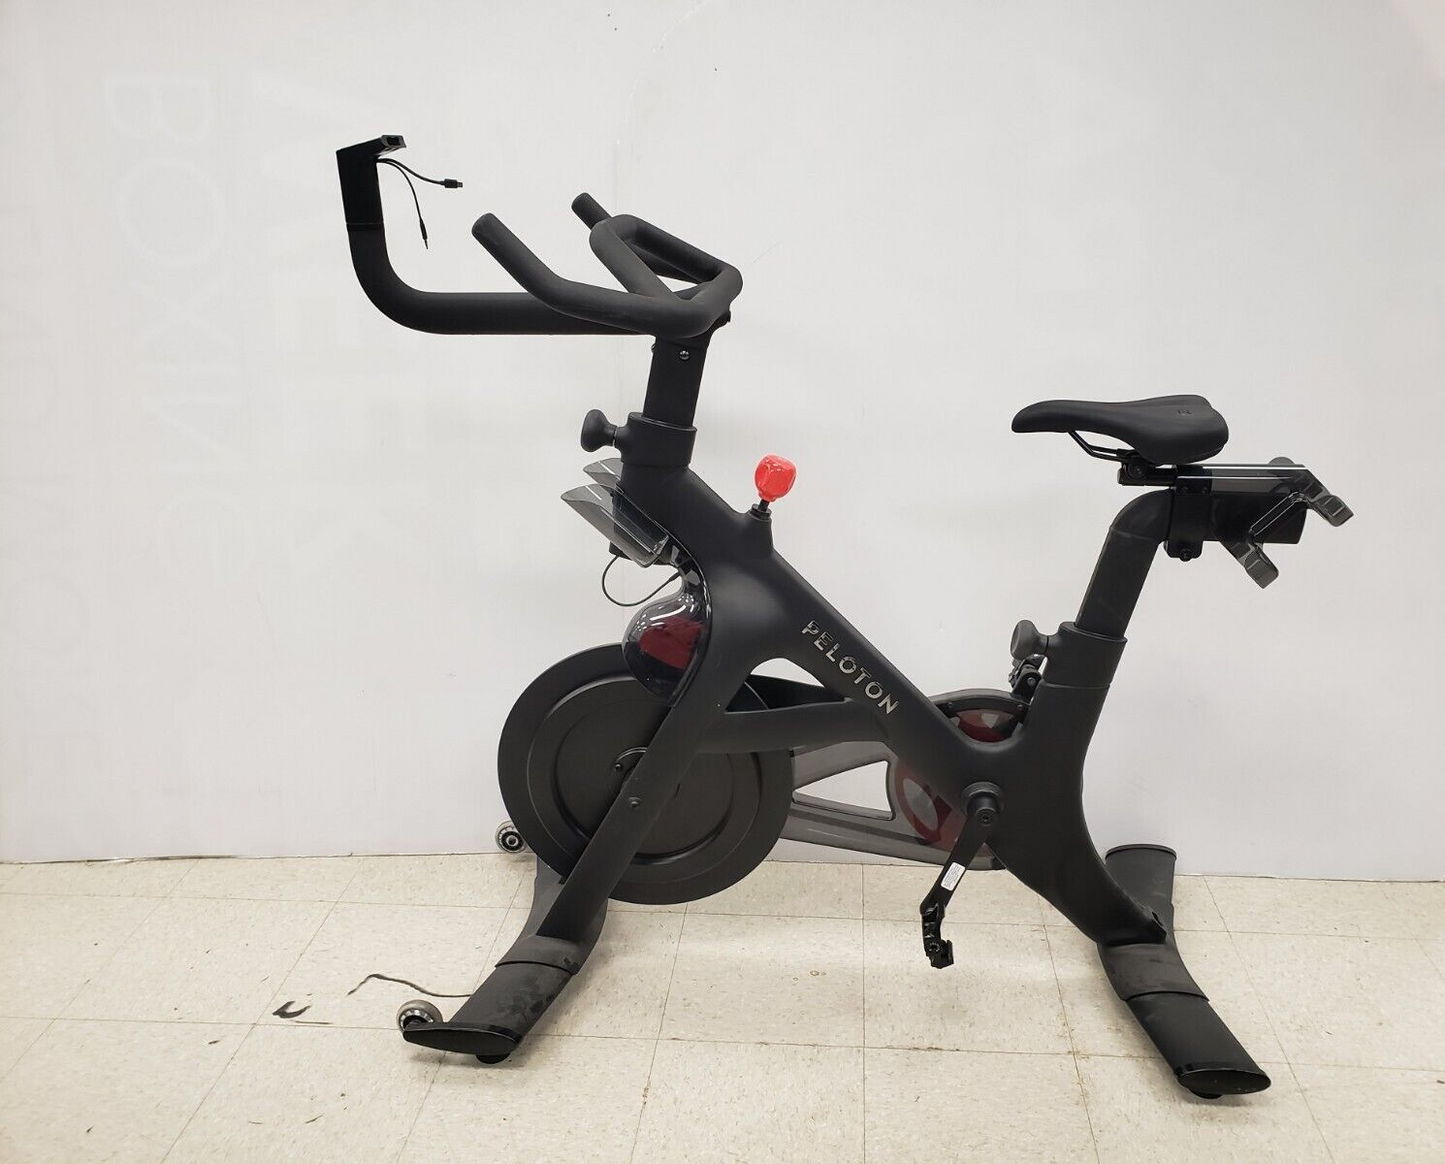 (55320-1) Peleton Bike+ Exercise Bike